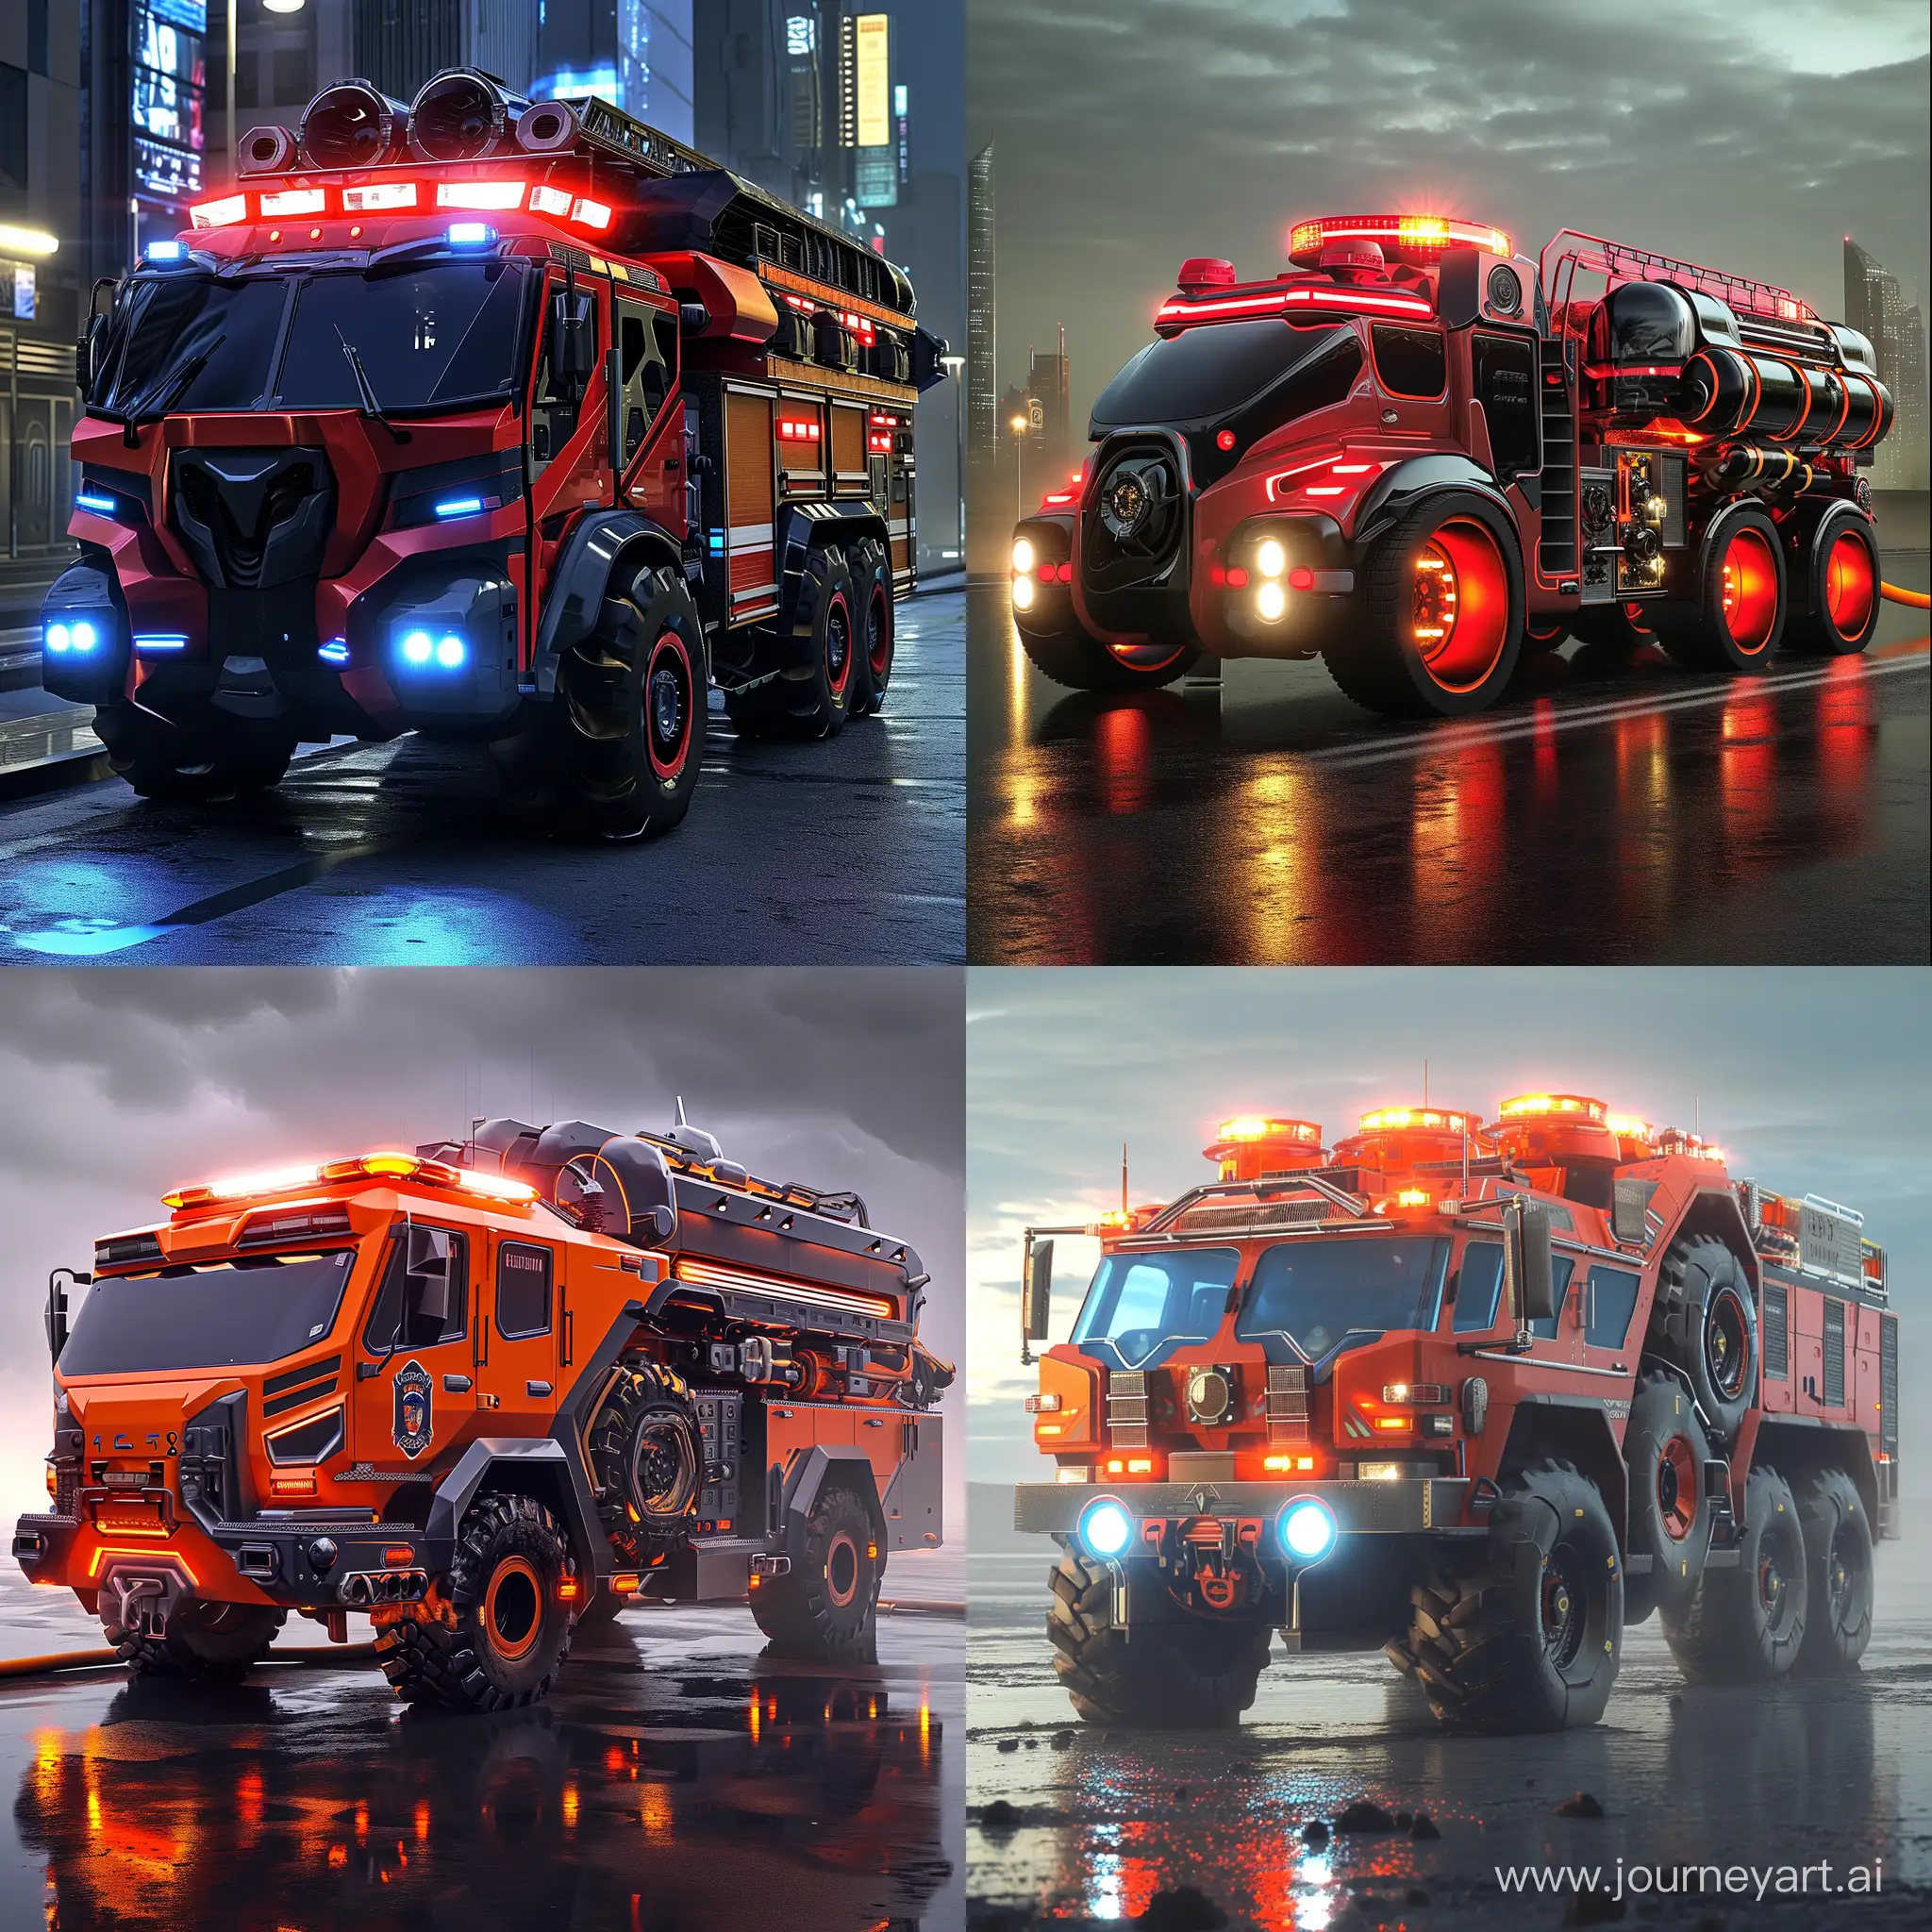 Futuristic-Fire-Truck-Concept-with-ImpactResistant-Design